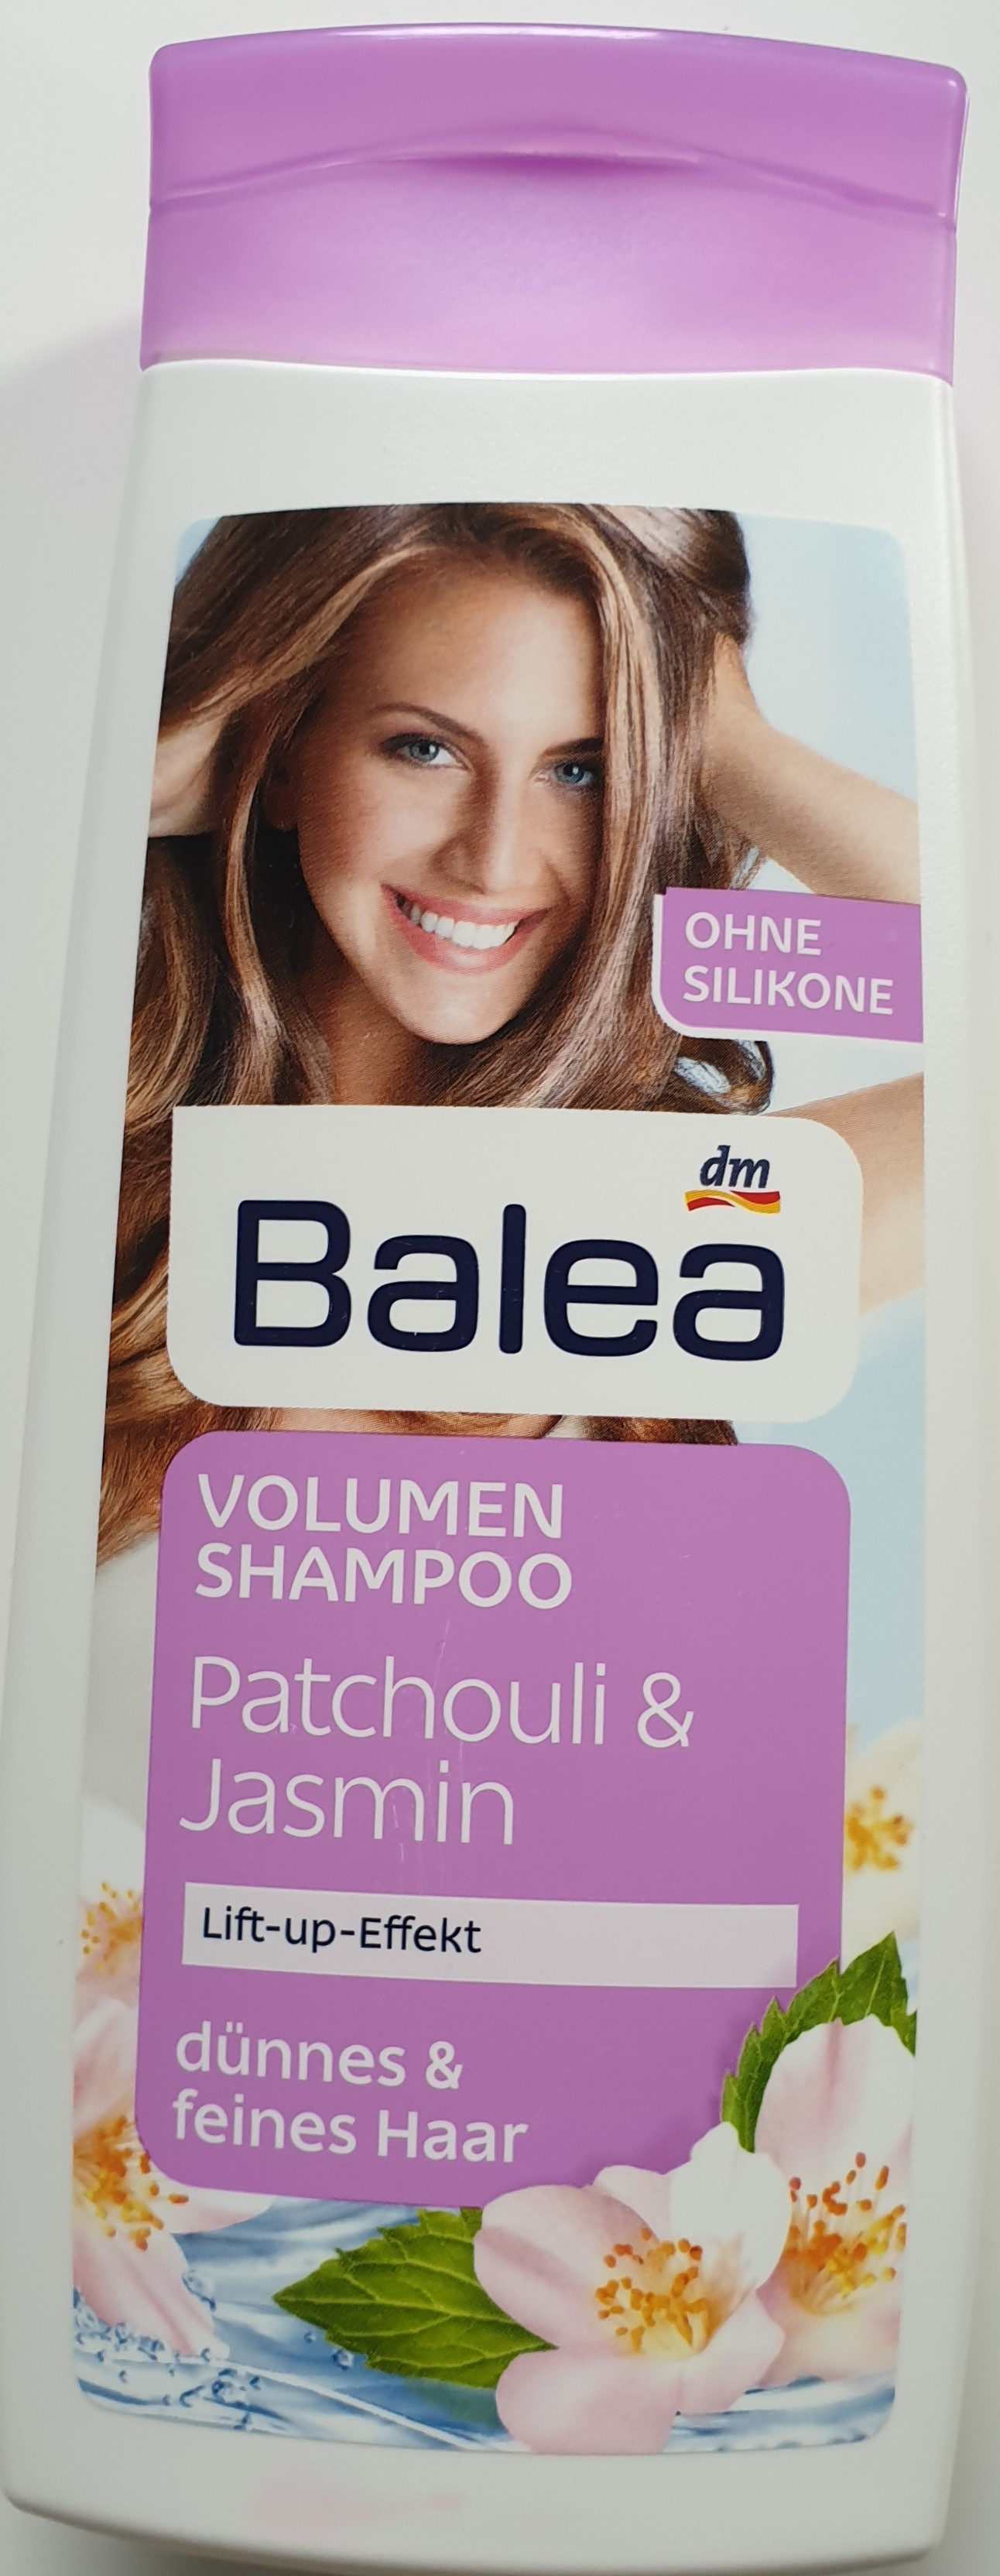 Volumen Shampoo Patchouli & Jasmin - Produit - de